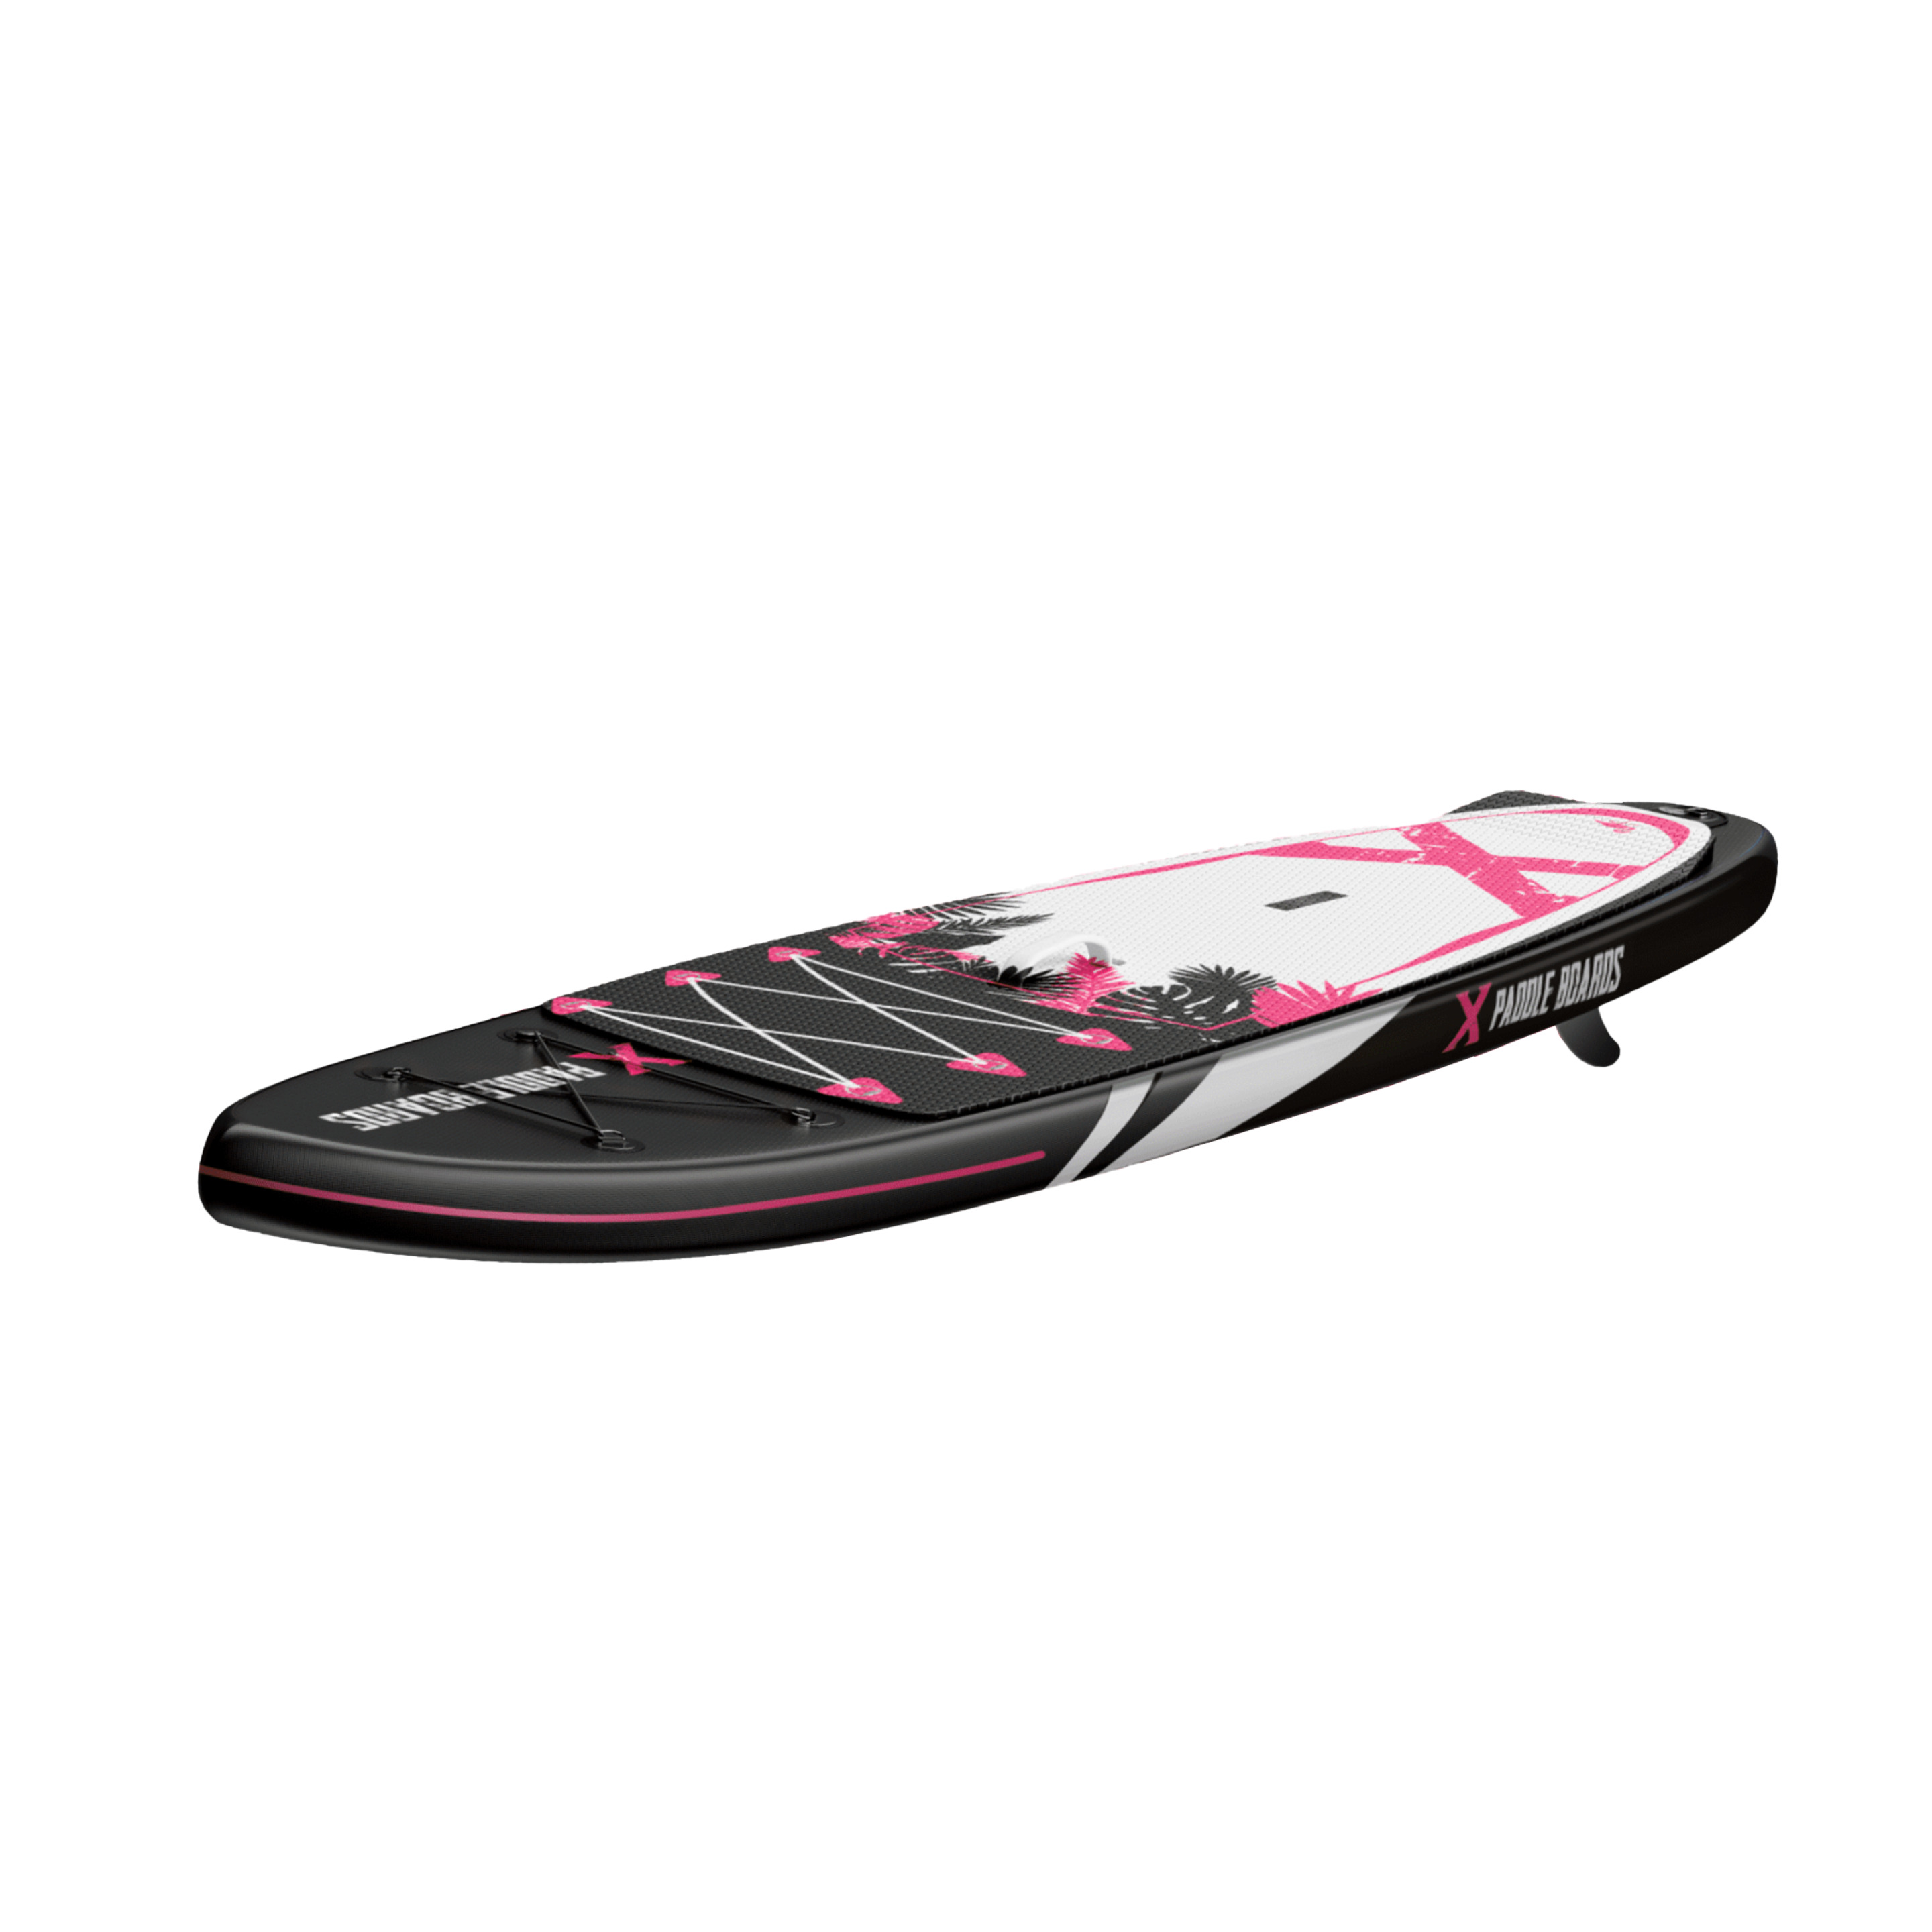 Tabla De Paddle Surf Hinchable  X-flamingo Kayak  310 X 82 X 15 Cm - Negro/Rosa  MKP